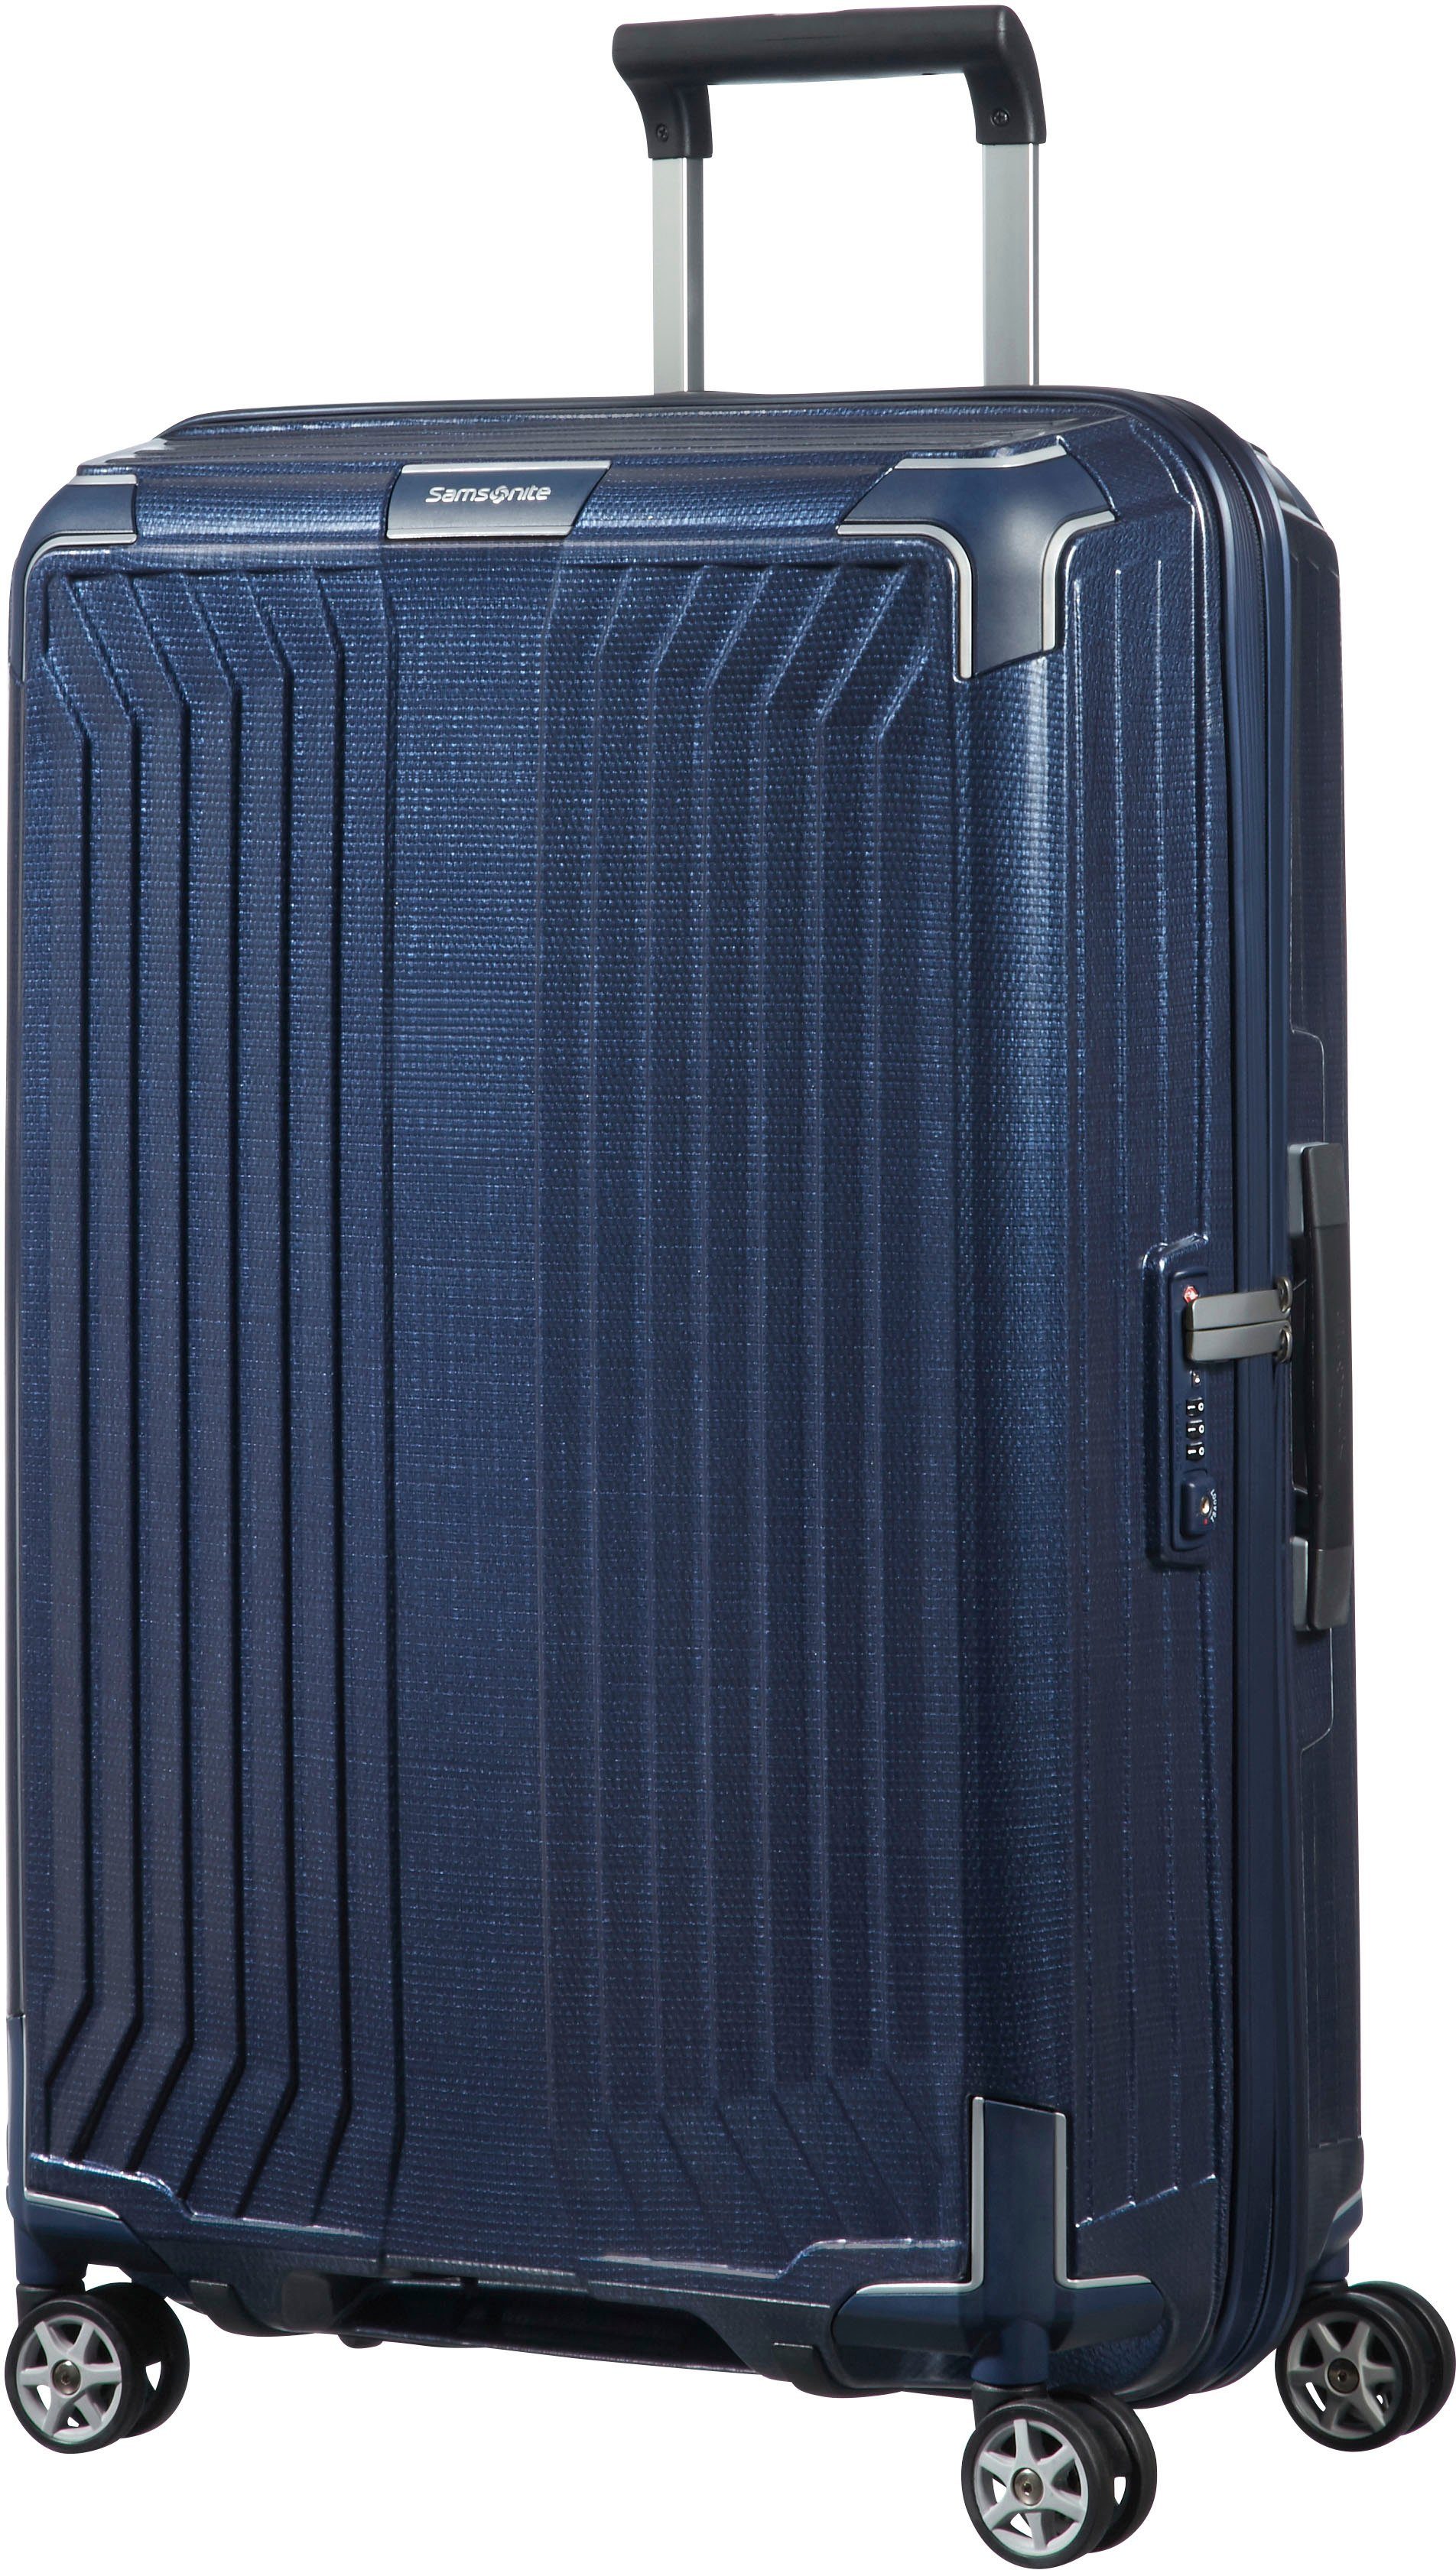 Samsonite Koffer LITE BOX 69, 4 Rollen, Koffer Reisegepäck Koffer mittel groß Reisekoffer TSA-Zahlenschloss